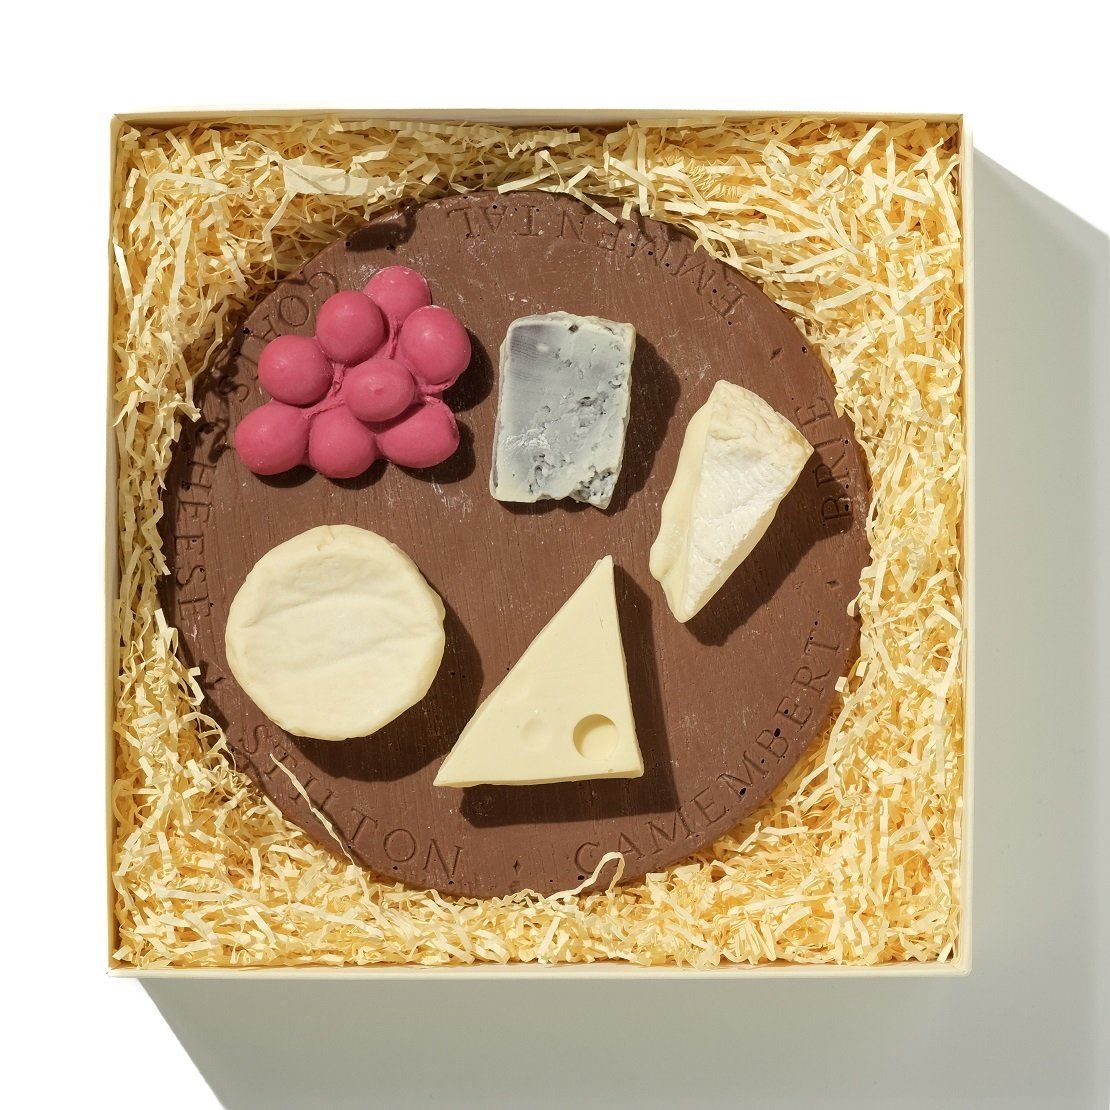 Chocolate Cheese Board – Choc on Choc